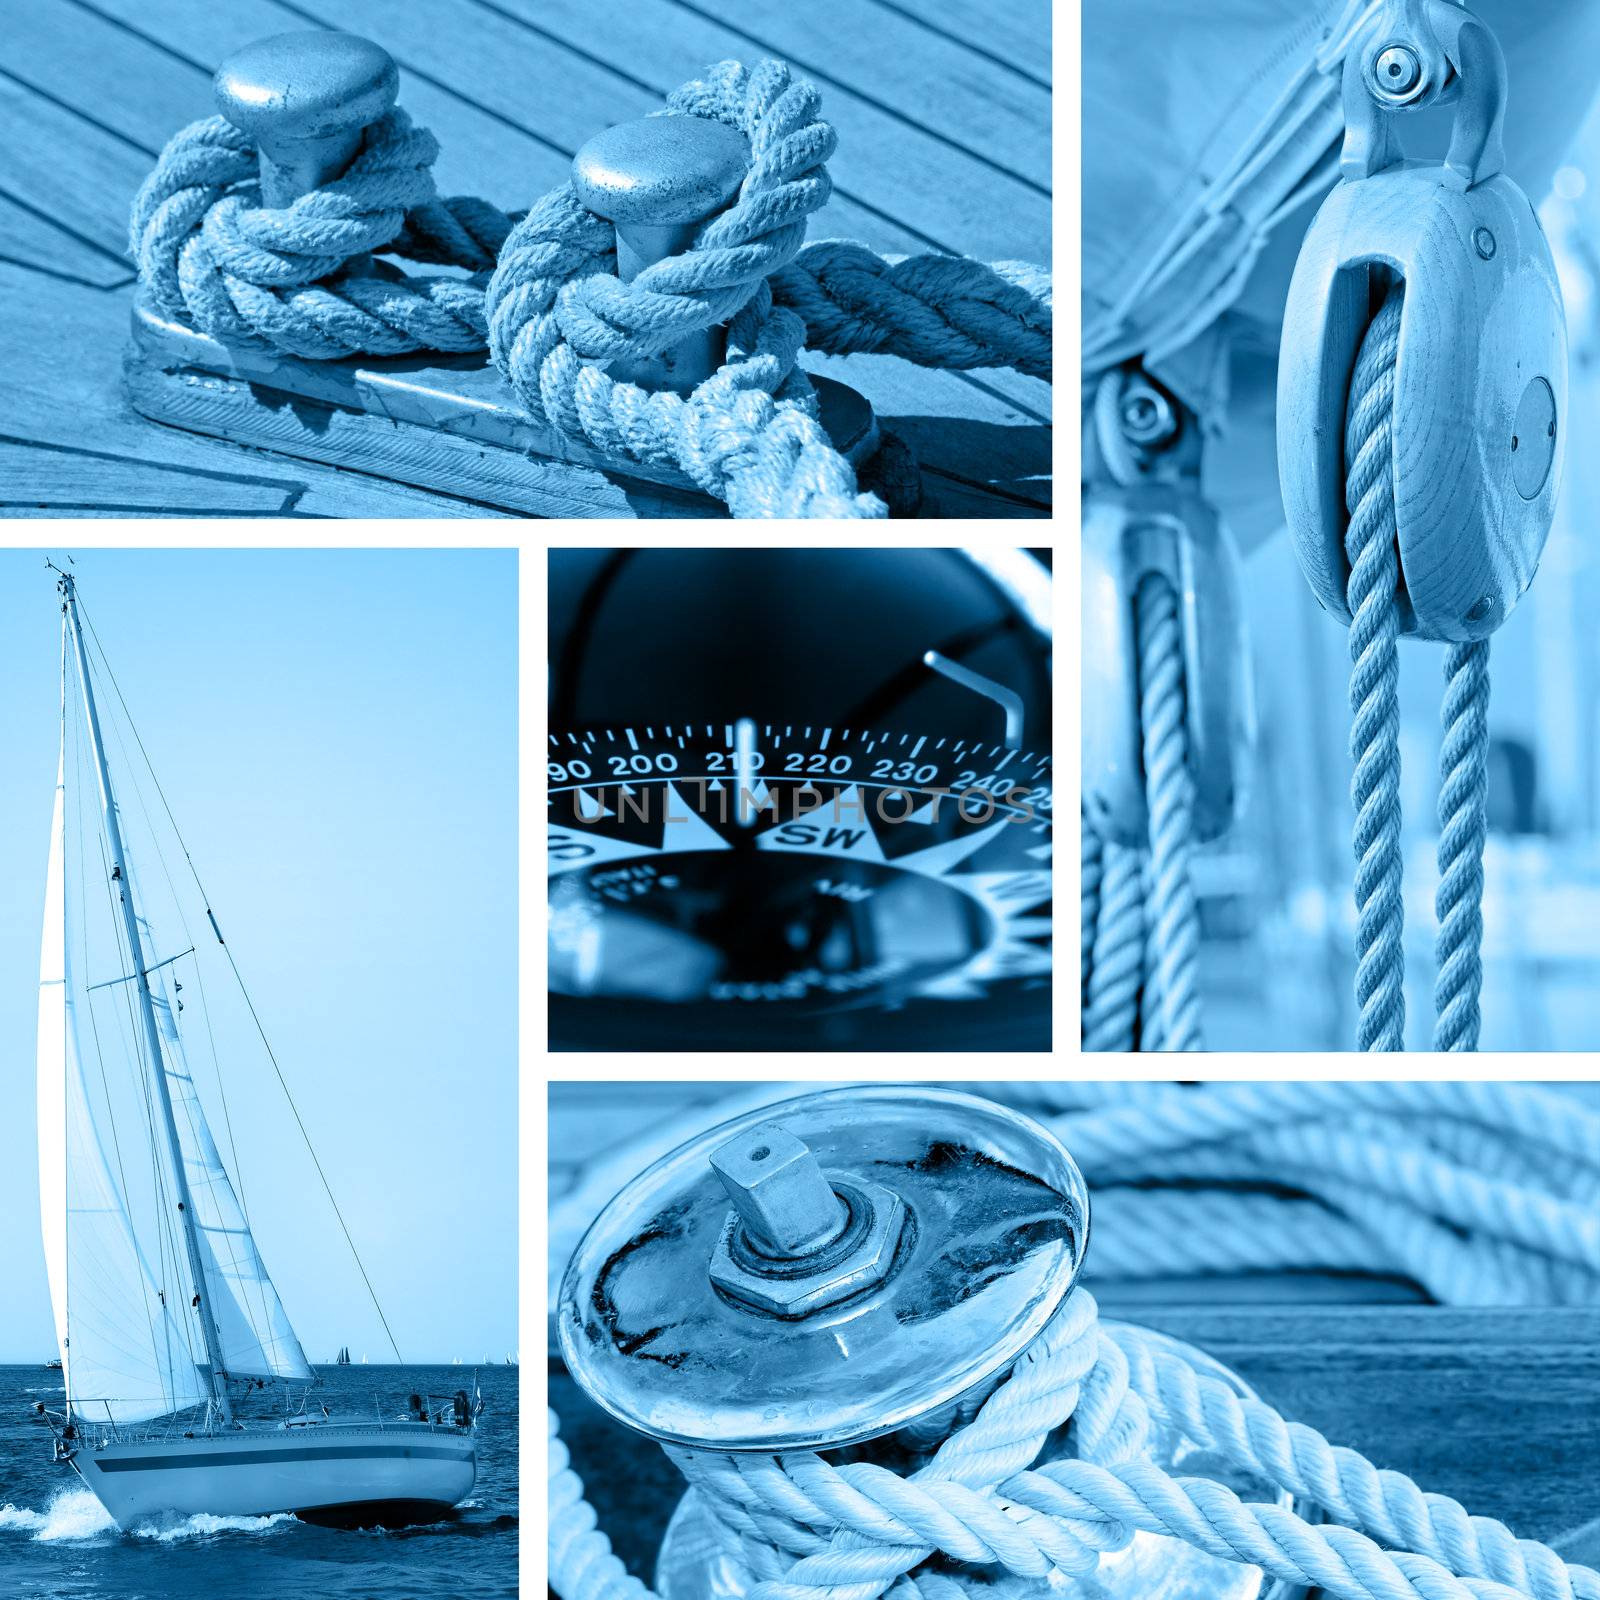 Sailboat images set by lebanmax